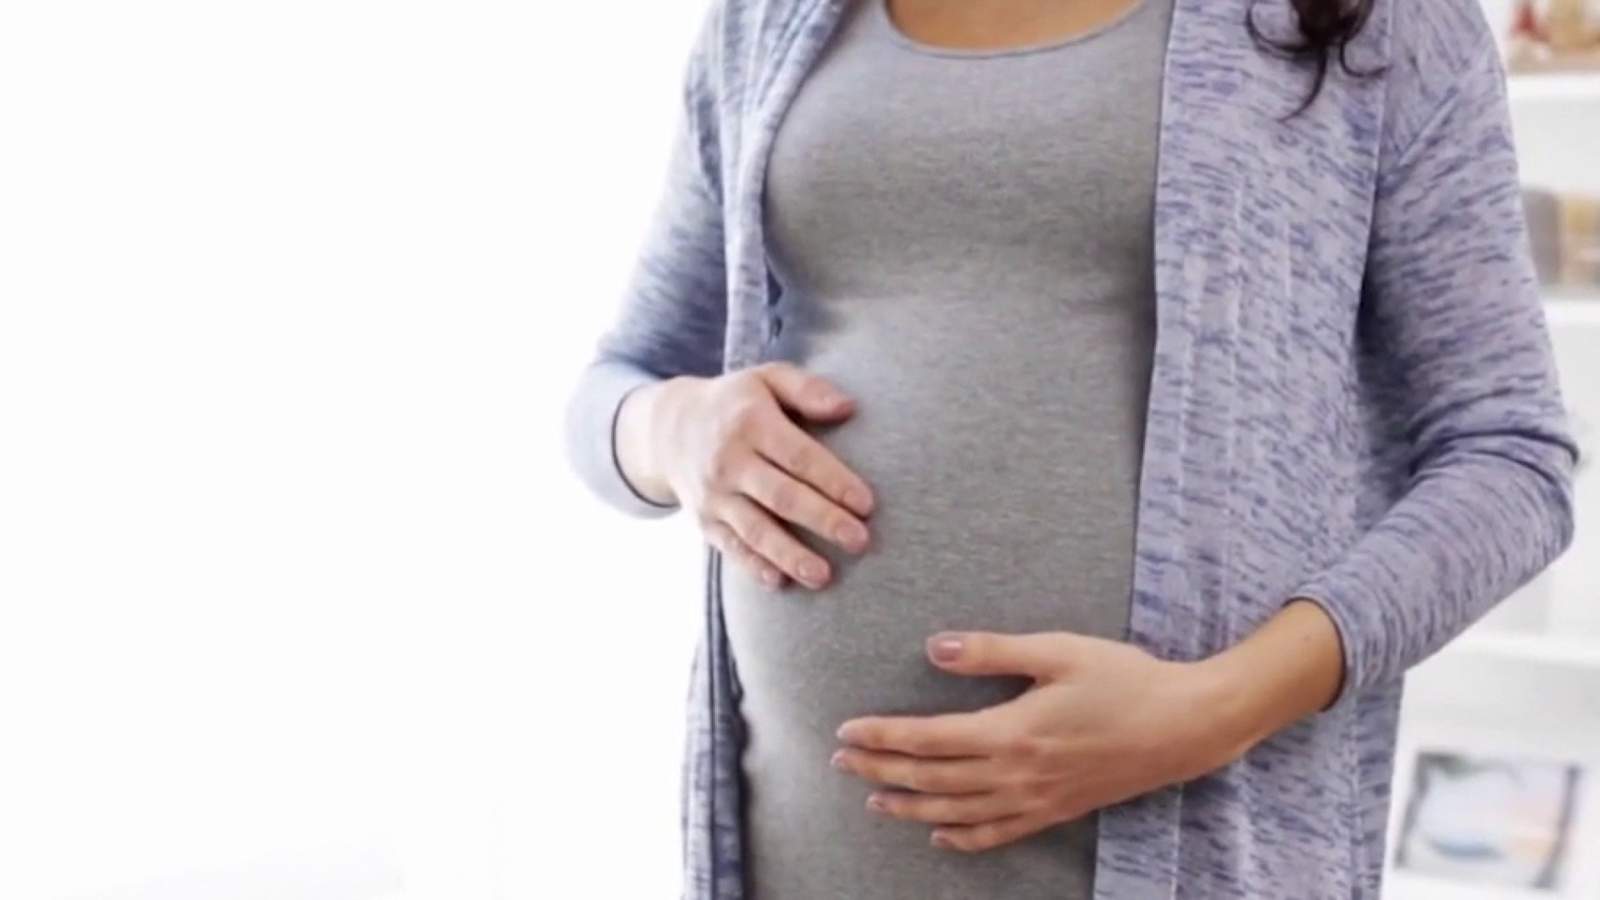 San Antonio doctor explains if pregnant women should receive COVID-19 vaccine